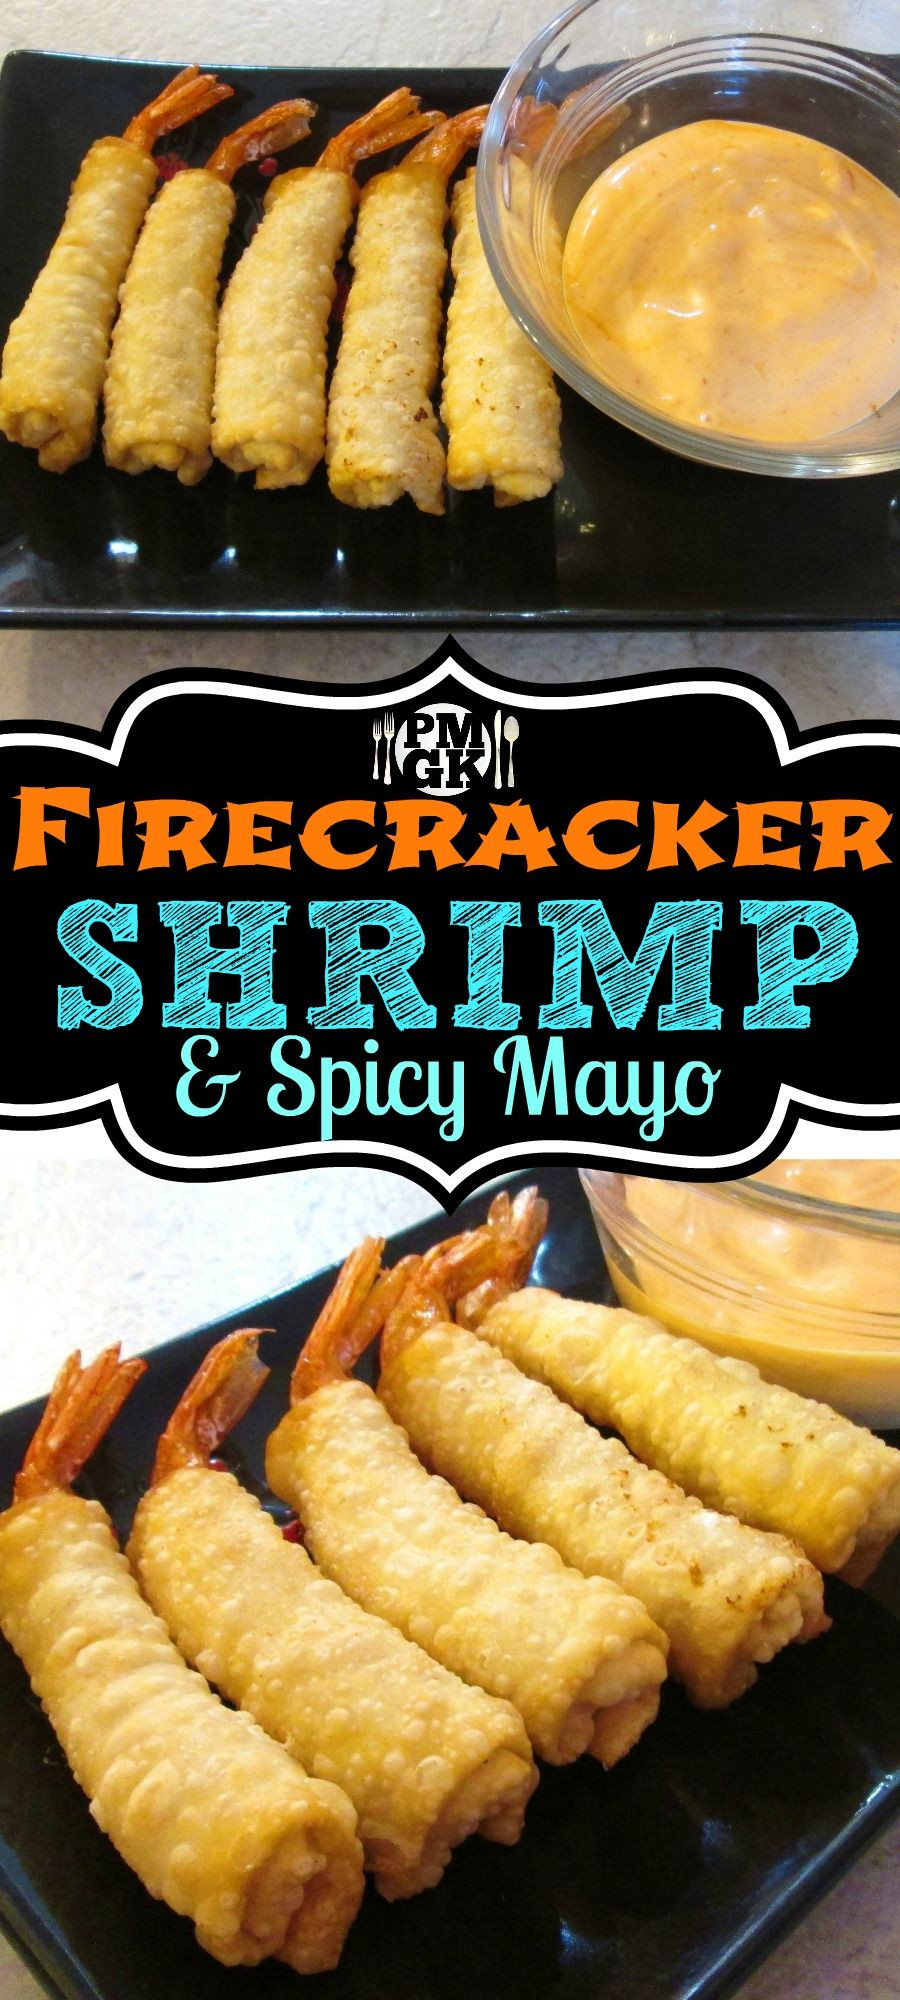 Firecracker Shrimp Appetizer Recipe
 Firecracker Shrimp with Spicy Mayo